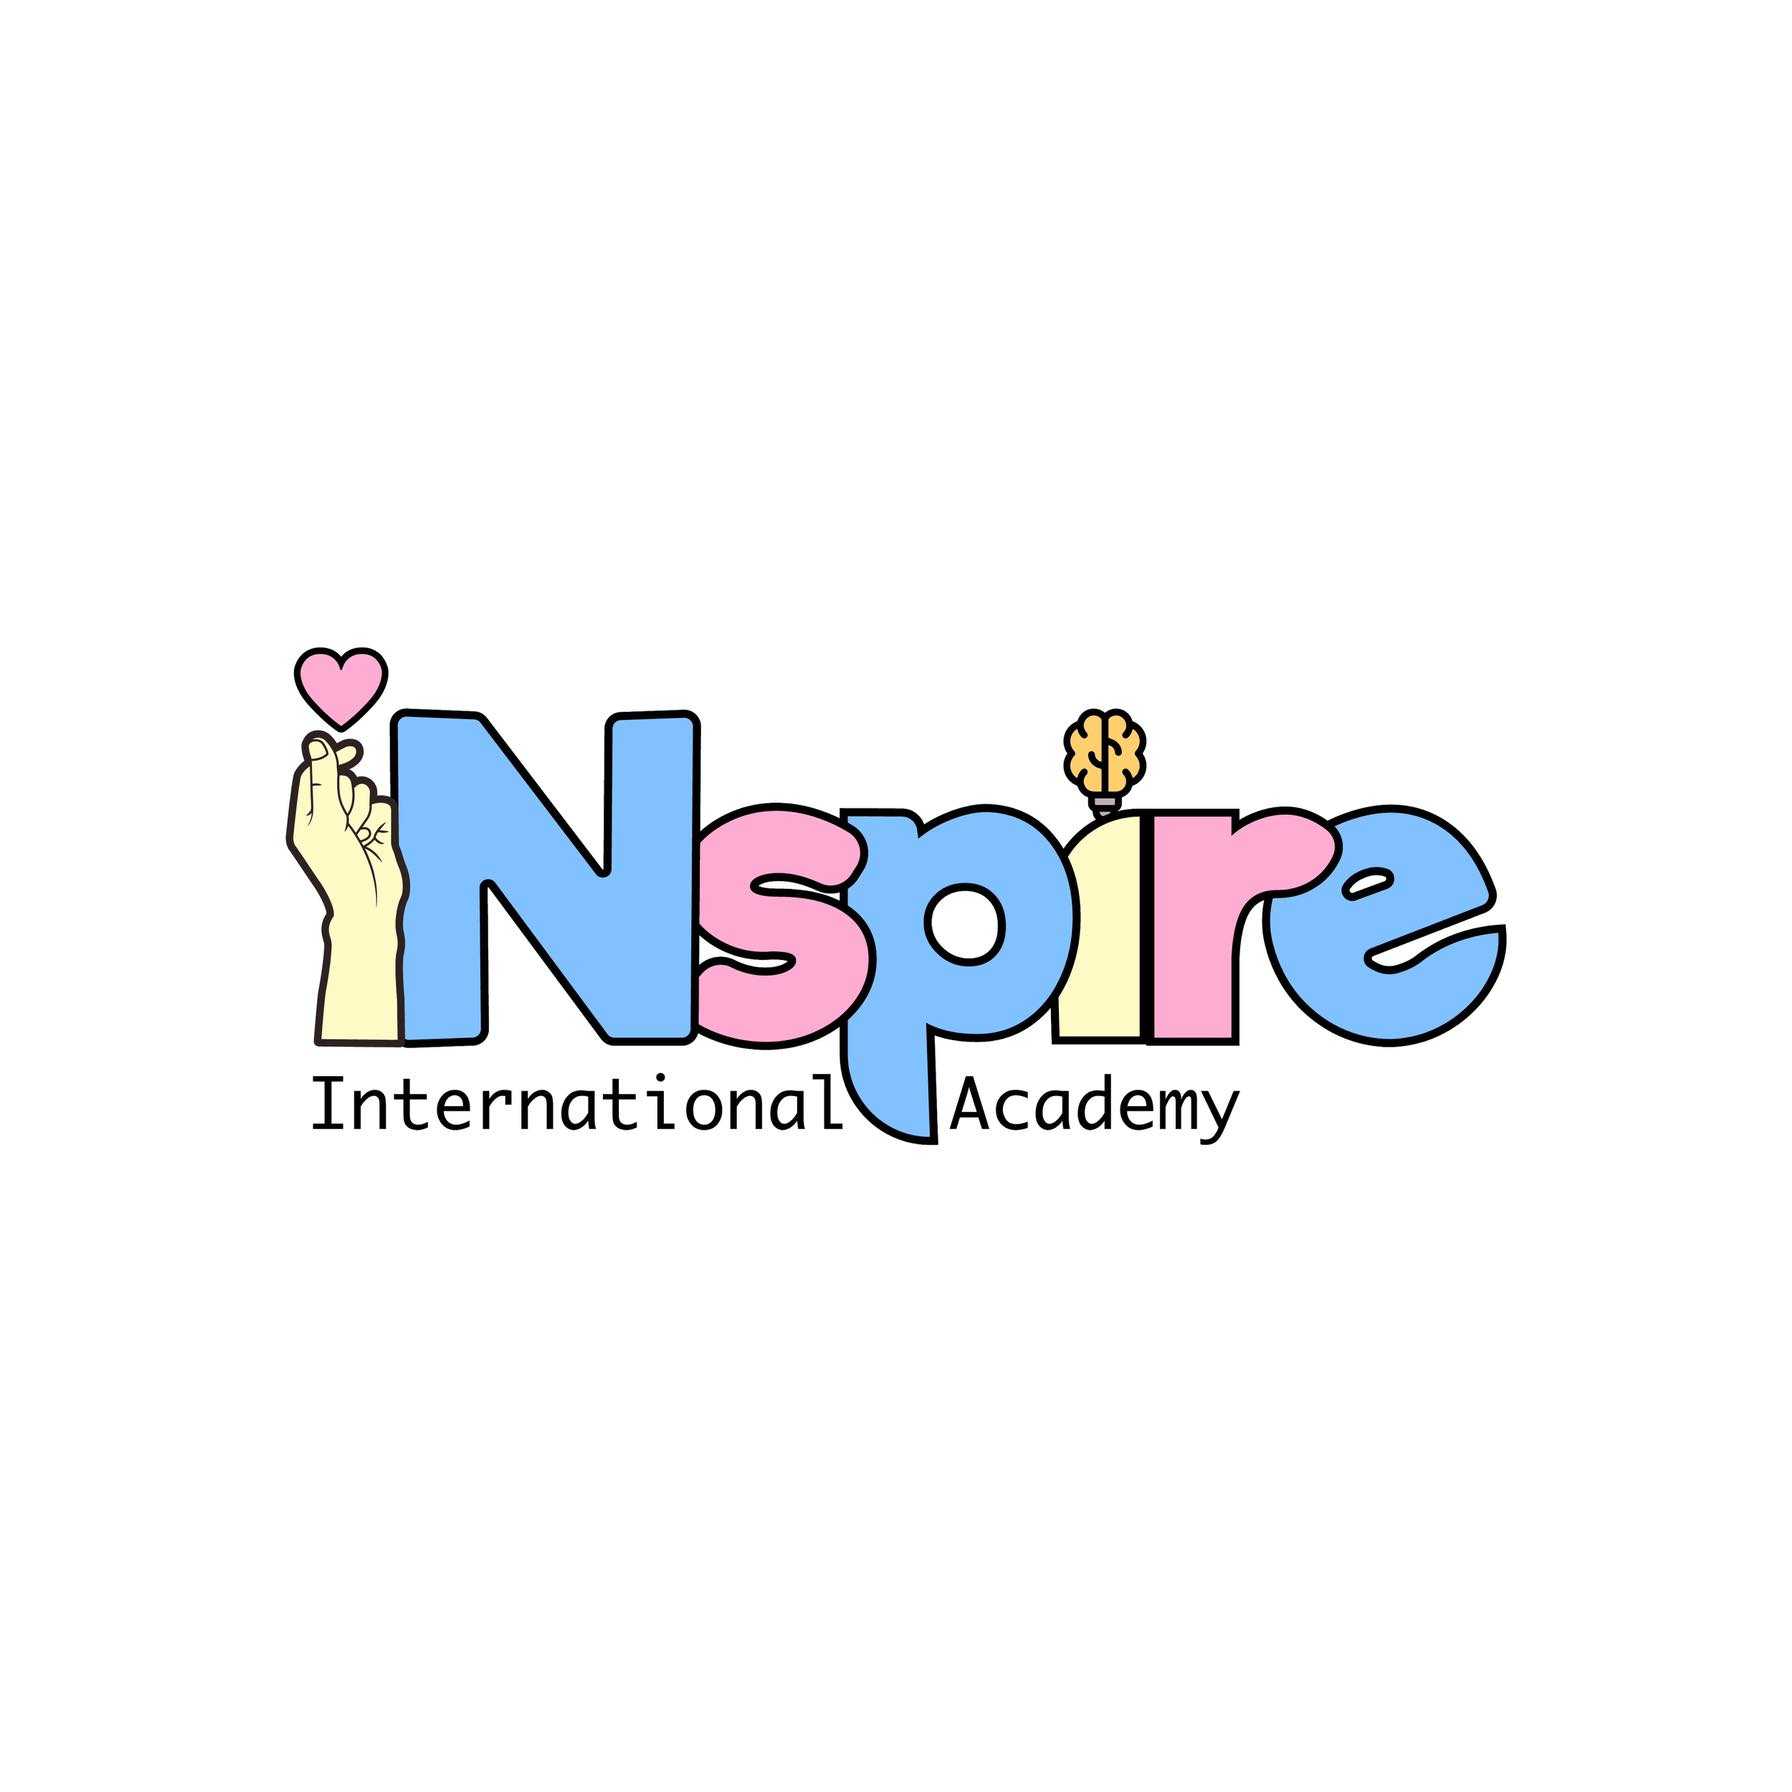 iNspire International Academy